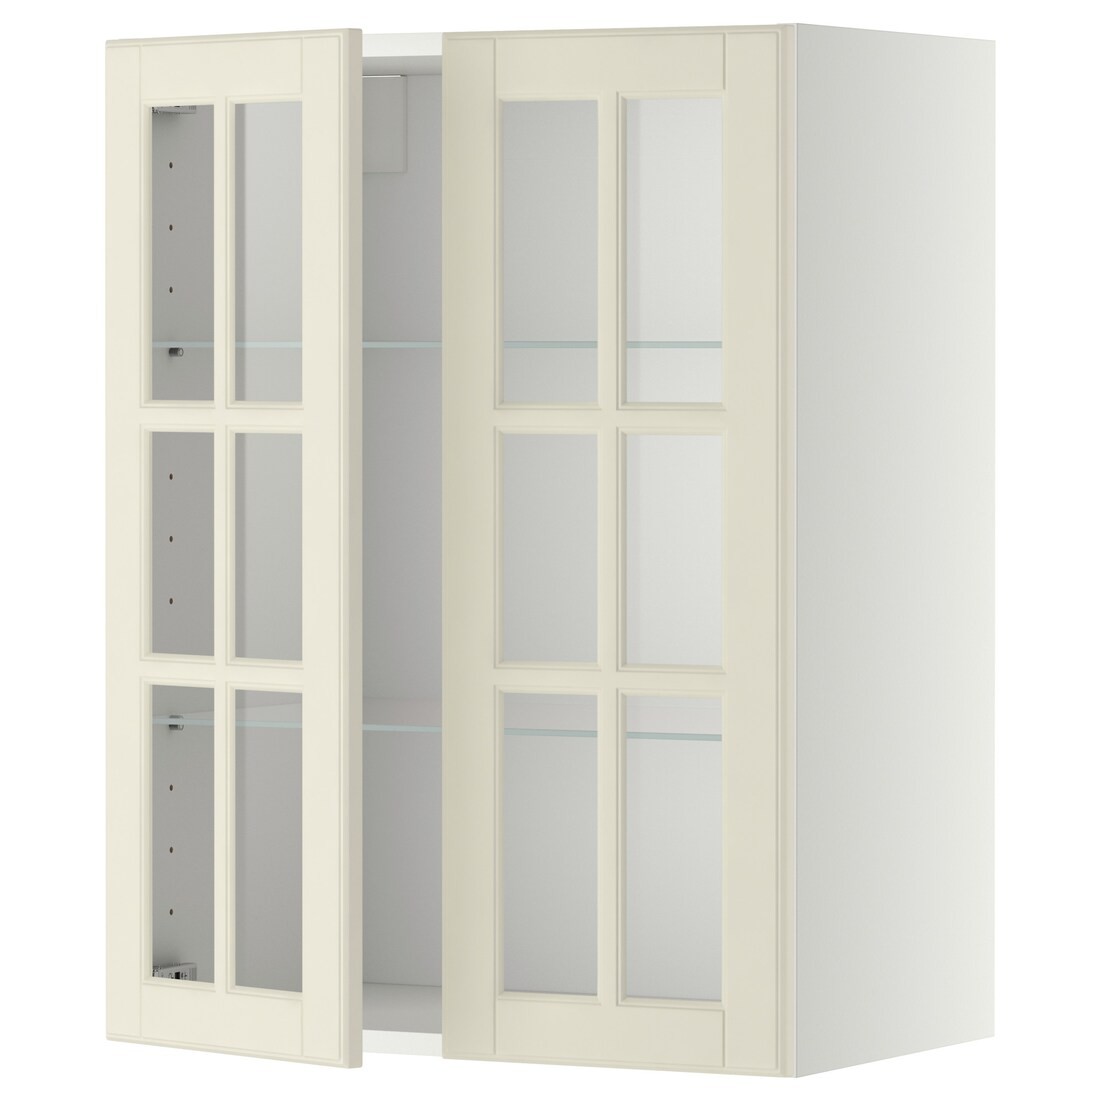 IKEA METOD МЕТОД Навесной шкаф, белый / Bodbyn кремовый, 60x80 см 89394980 893.949.80